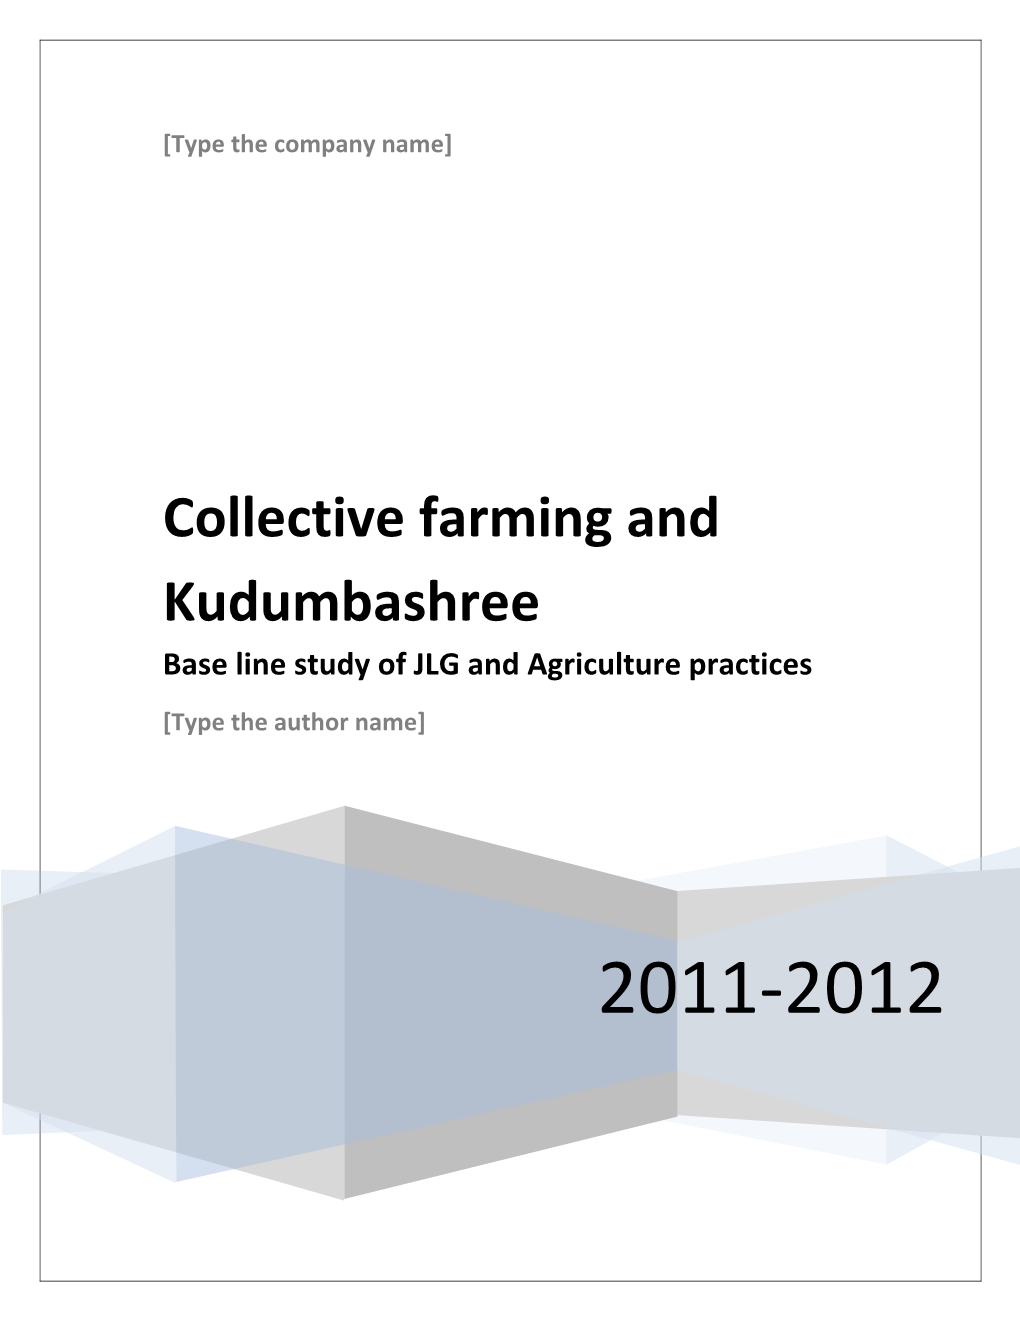 Collective Farming and Kudumbashree